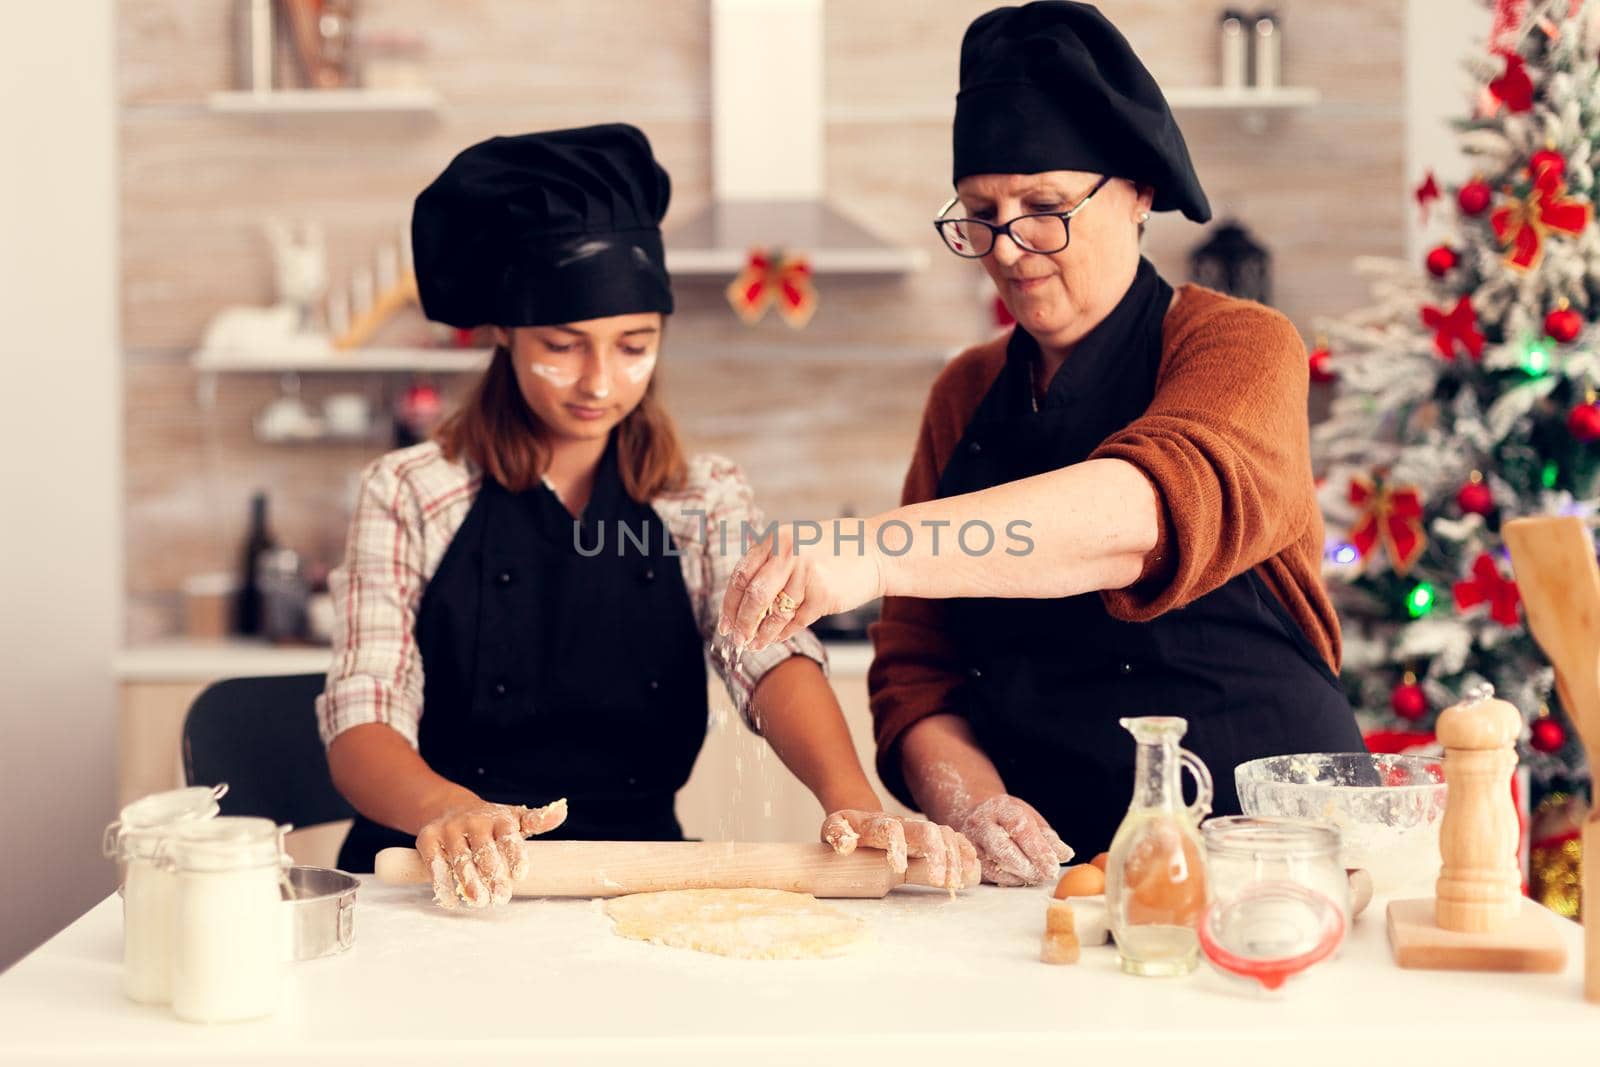 Grandchild wearing apron on christmas day and grandmother spreading flour over dough. Happy cheerful joyfull teenage girl helping senior woman preparing sweet cookies to celebrate winter holidays.